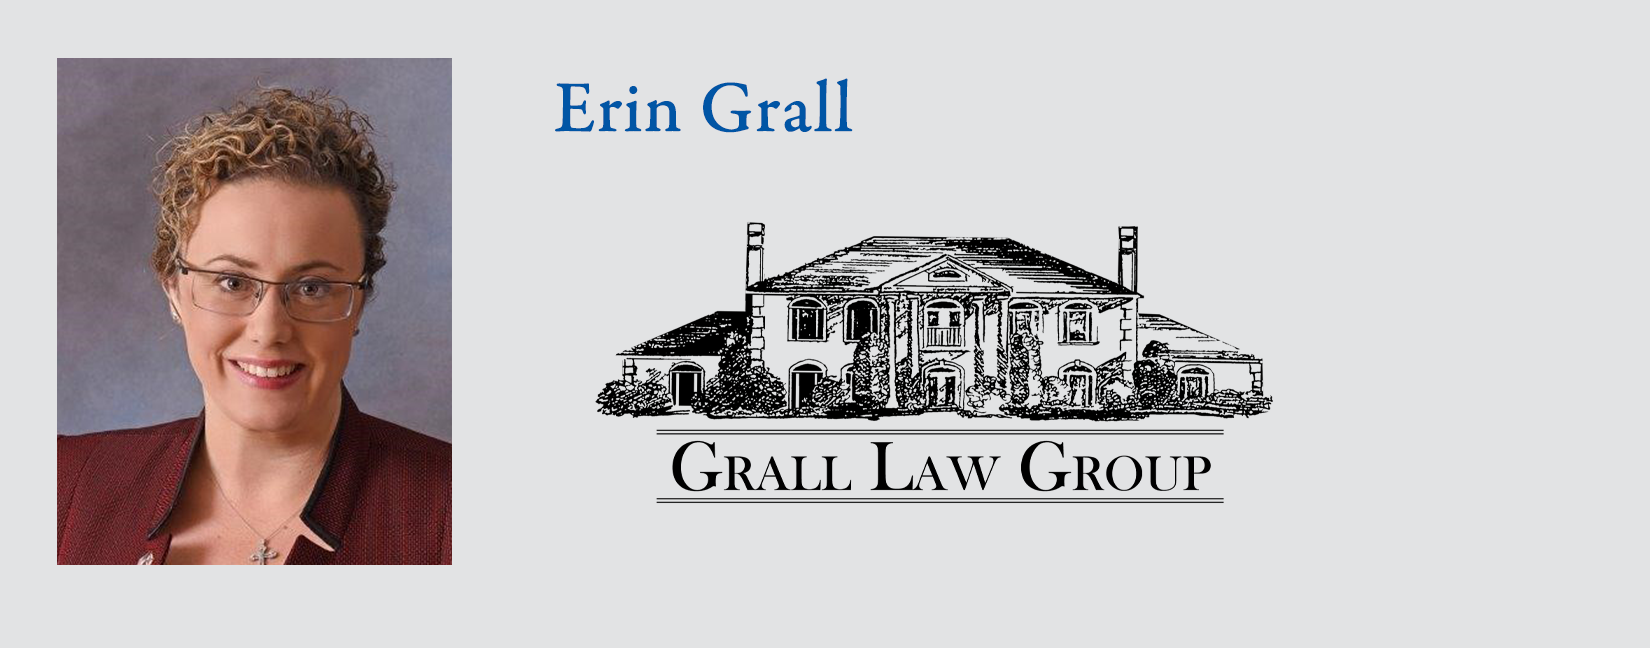 Erin Grall